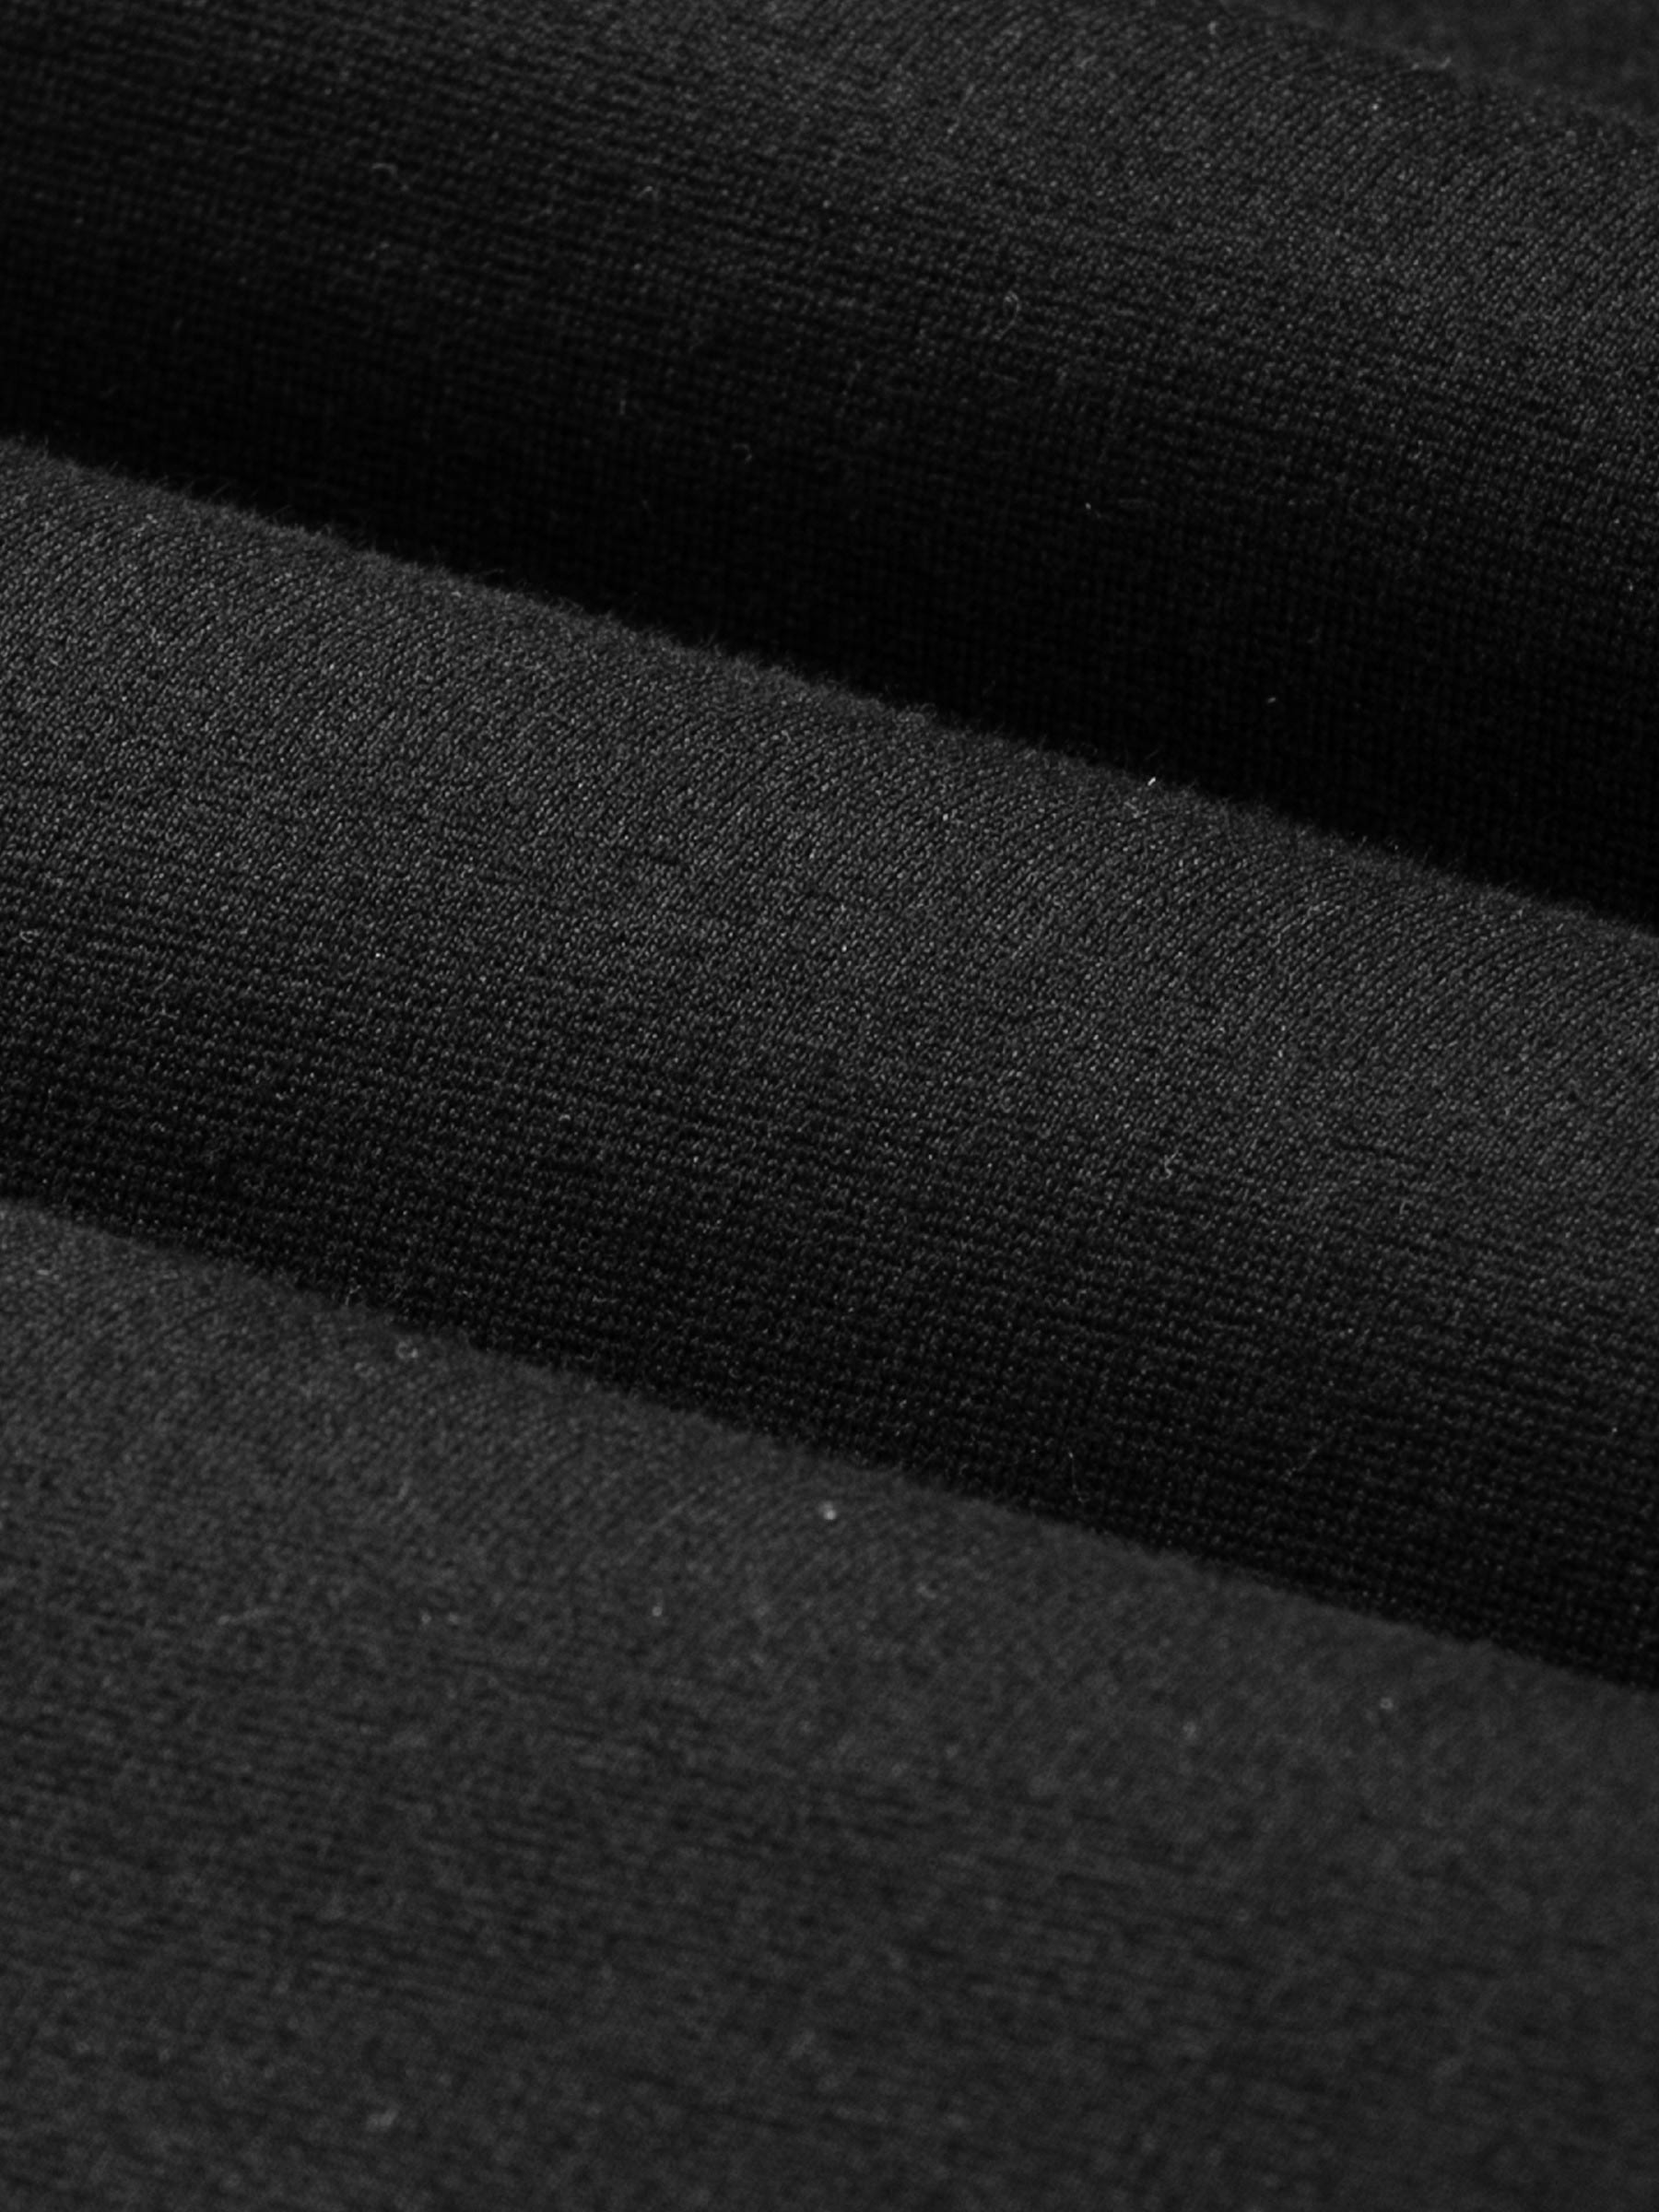 Sedona Round-Neck Peru Black Sweater 